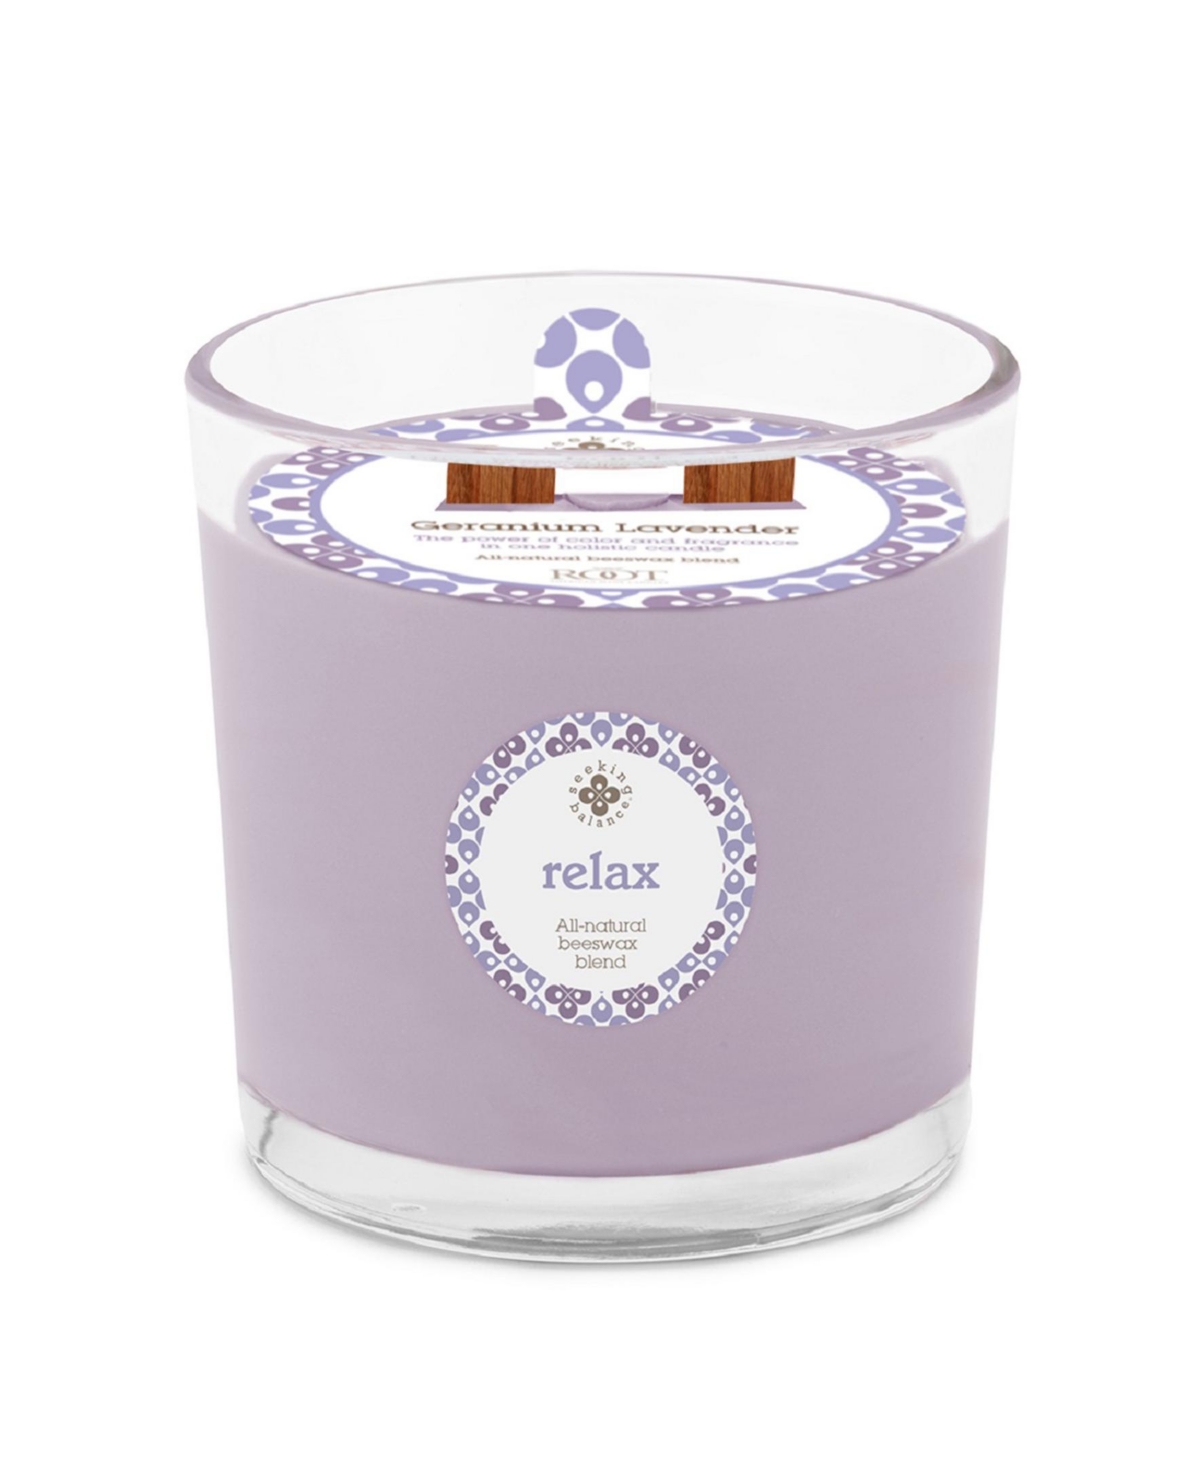 Seeking Balance 2 Wick Relax Geranium Lavender Spa Jar Candle, 12 oz - Lavender